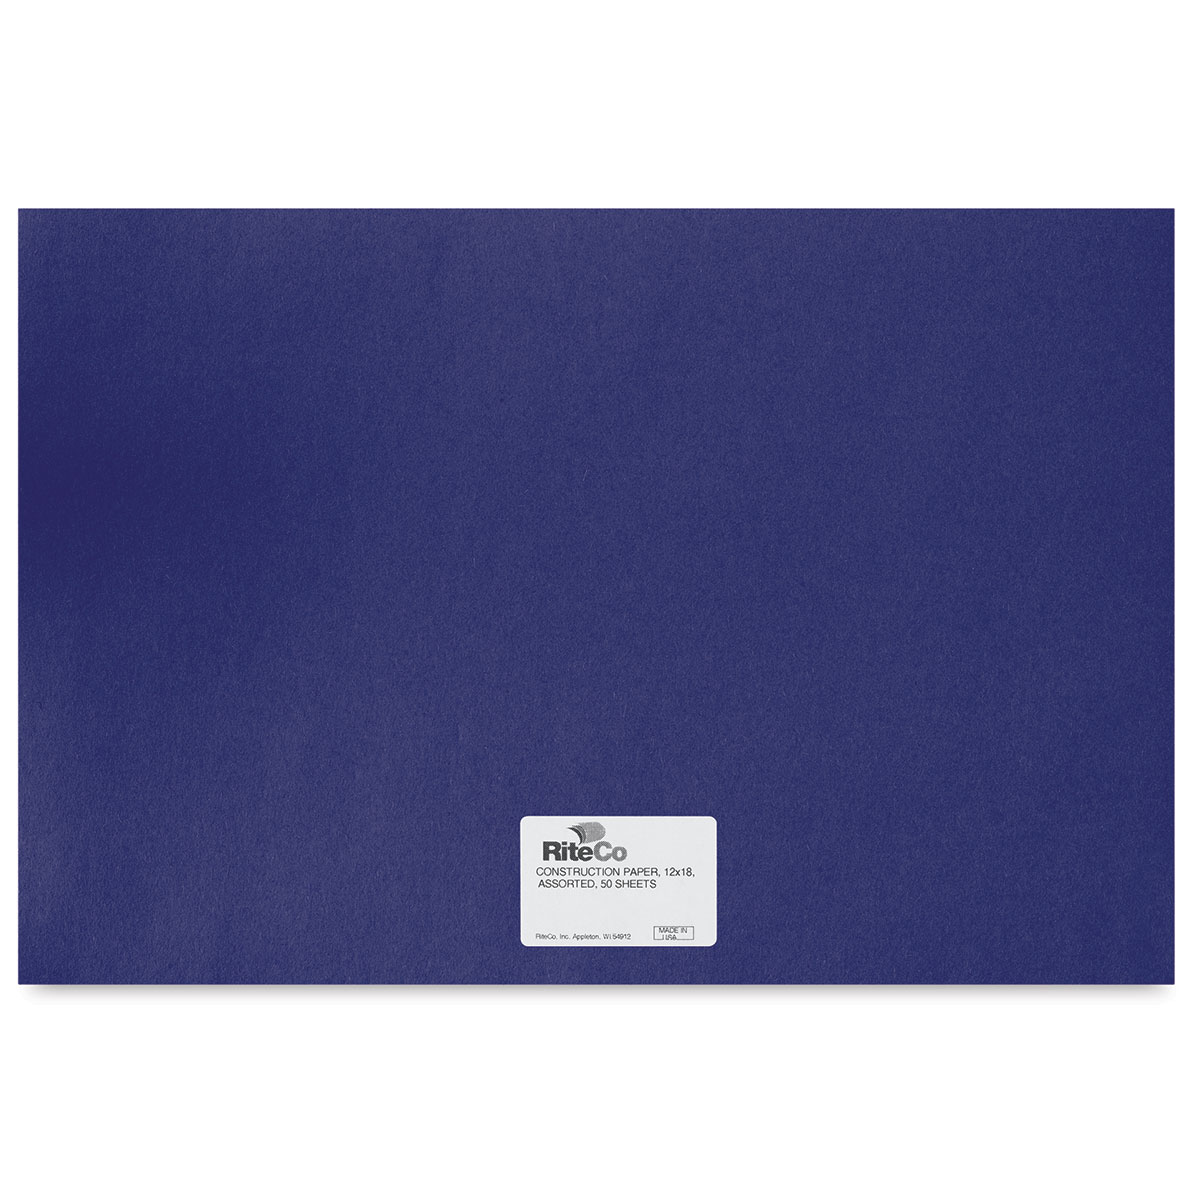 Riteco Construction Paper - Dark Blue, 12 inch x 18 inch, 50 Sheets